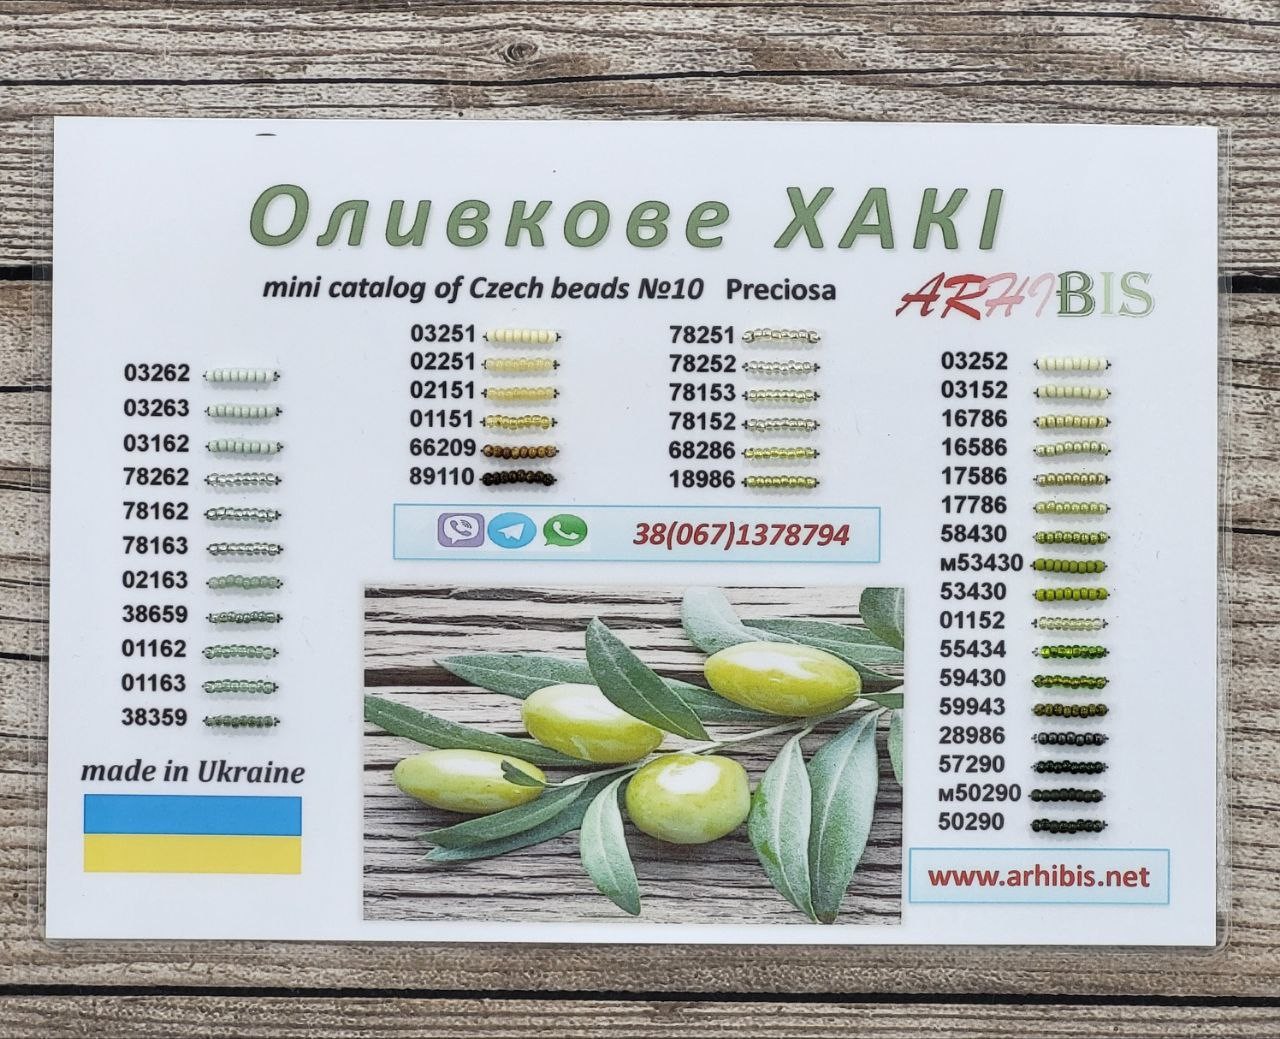 Mini Catalogs of Czech seed beads Preciosa in olive colors "Olive Khaki"